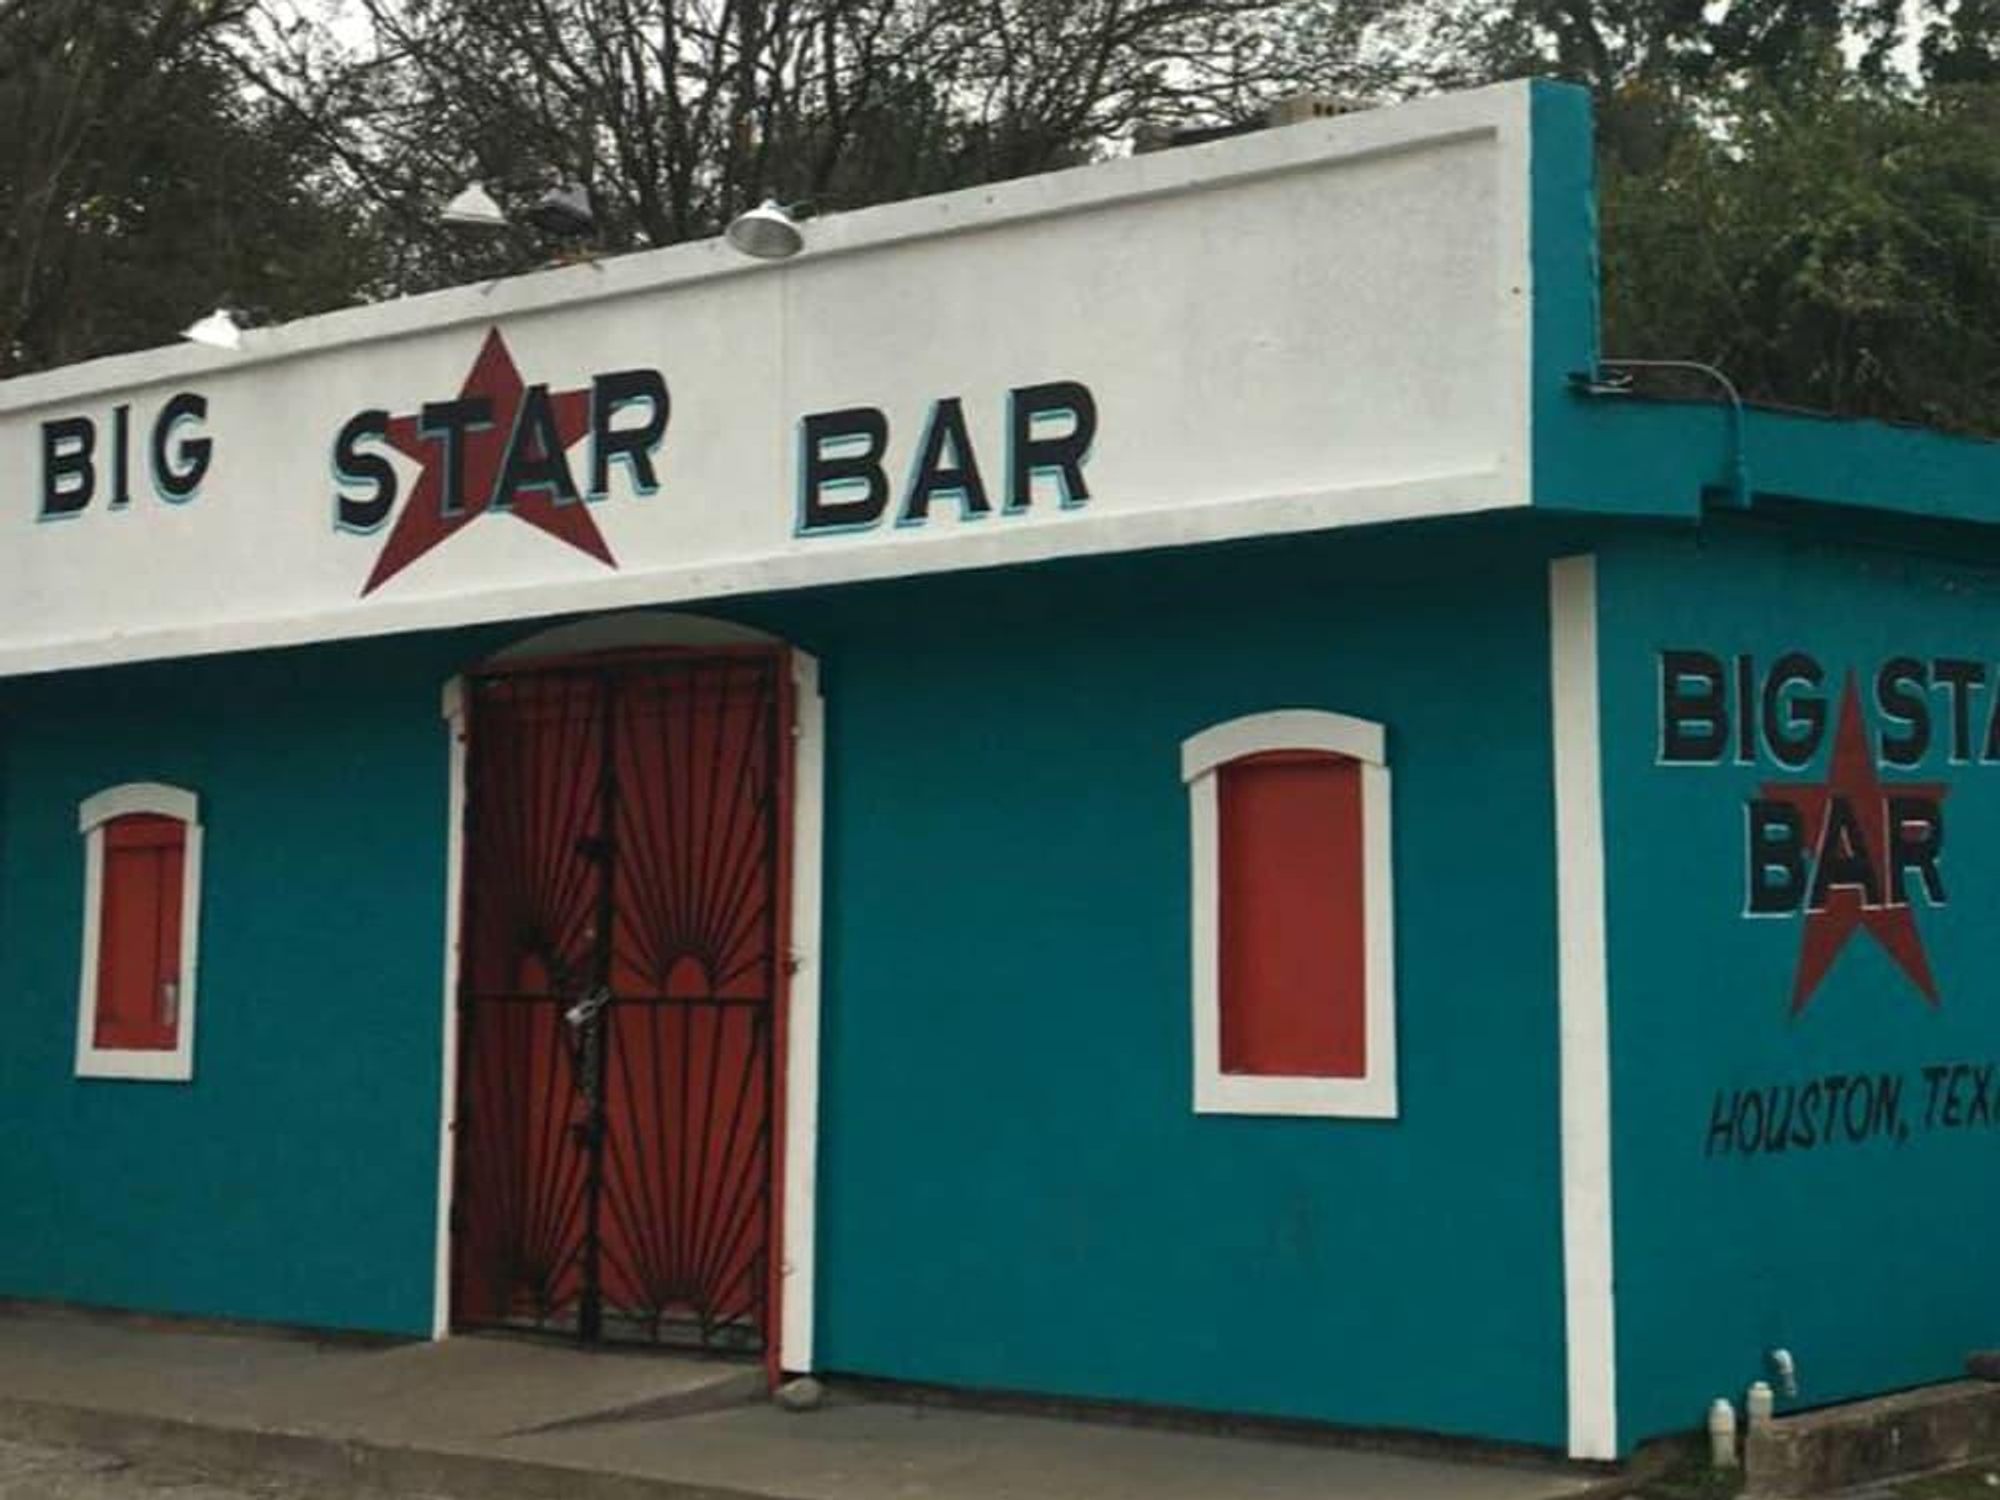 Big Star Bar exterior